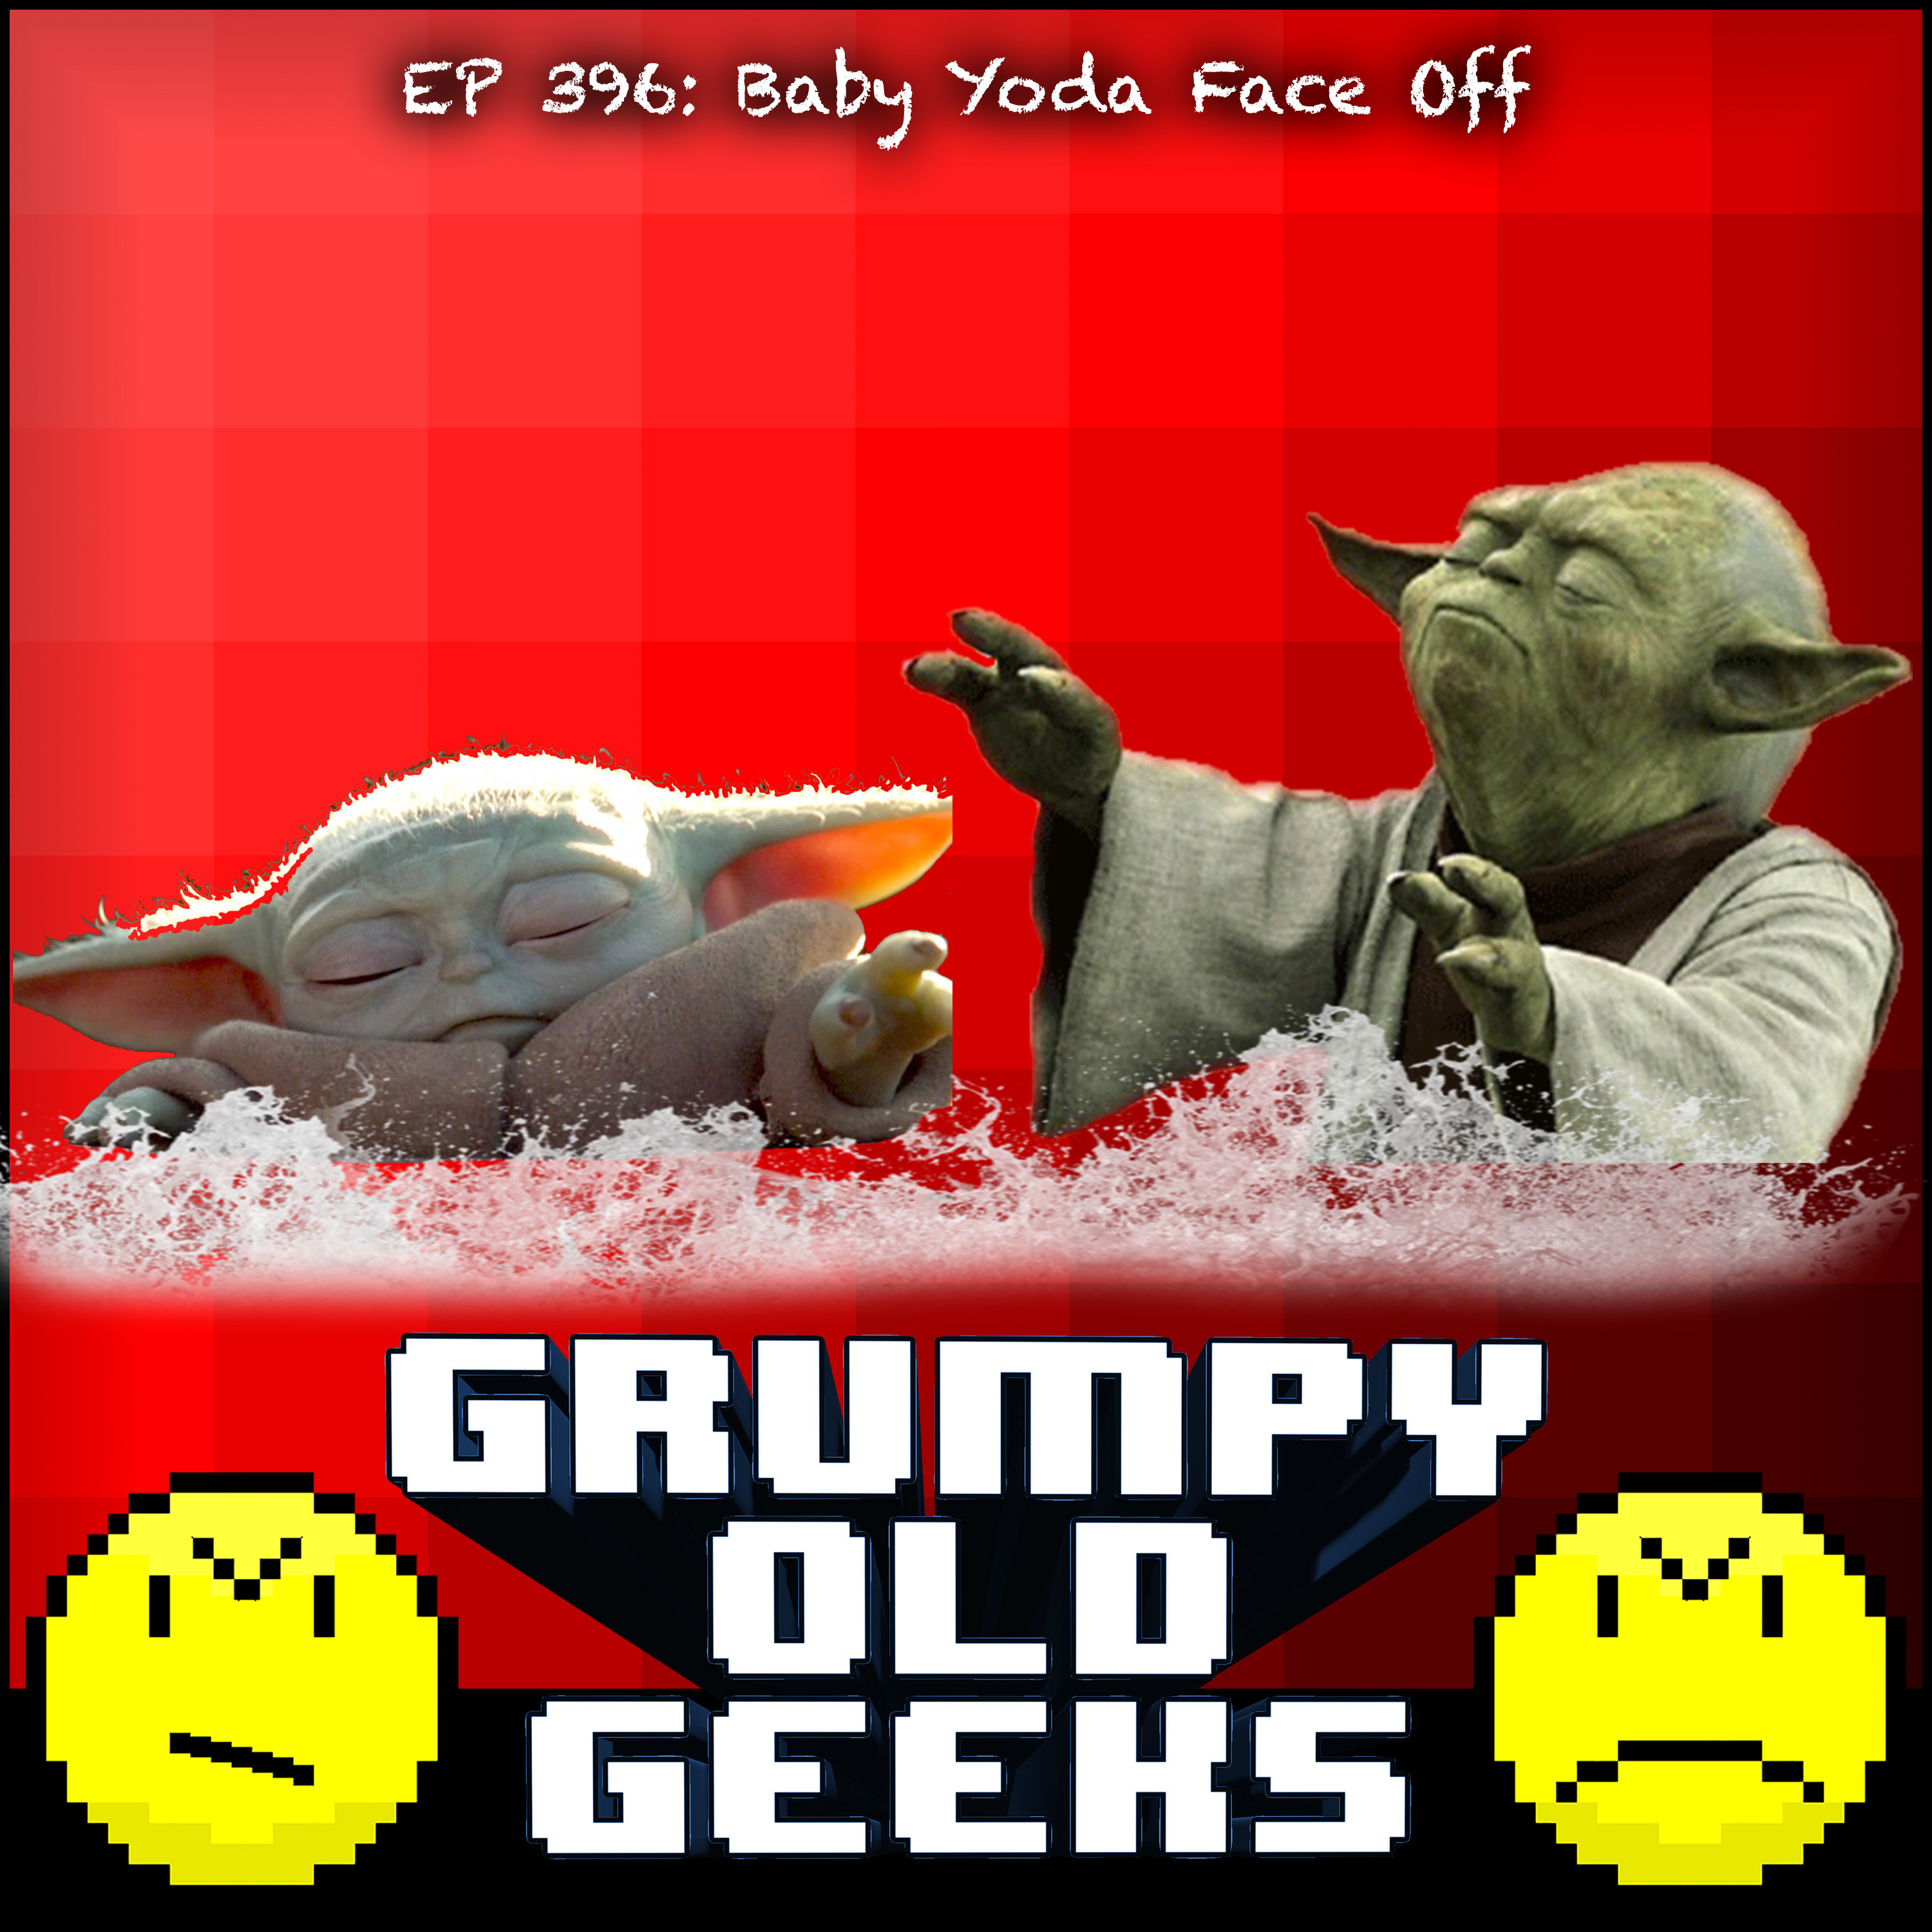 396: Baby Yoda Face Off Image